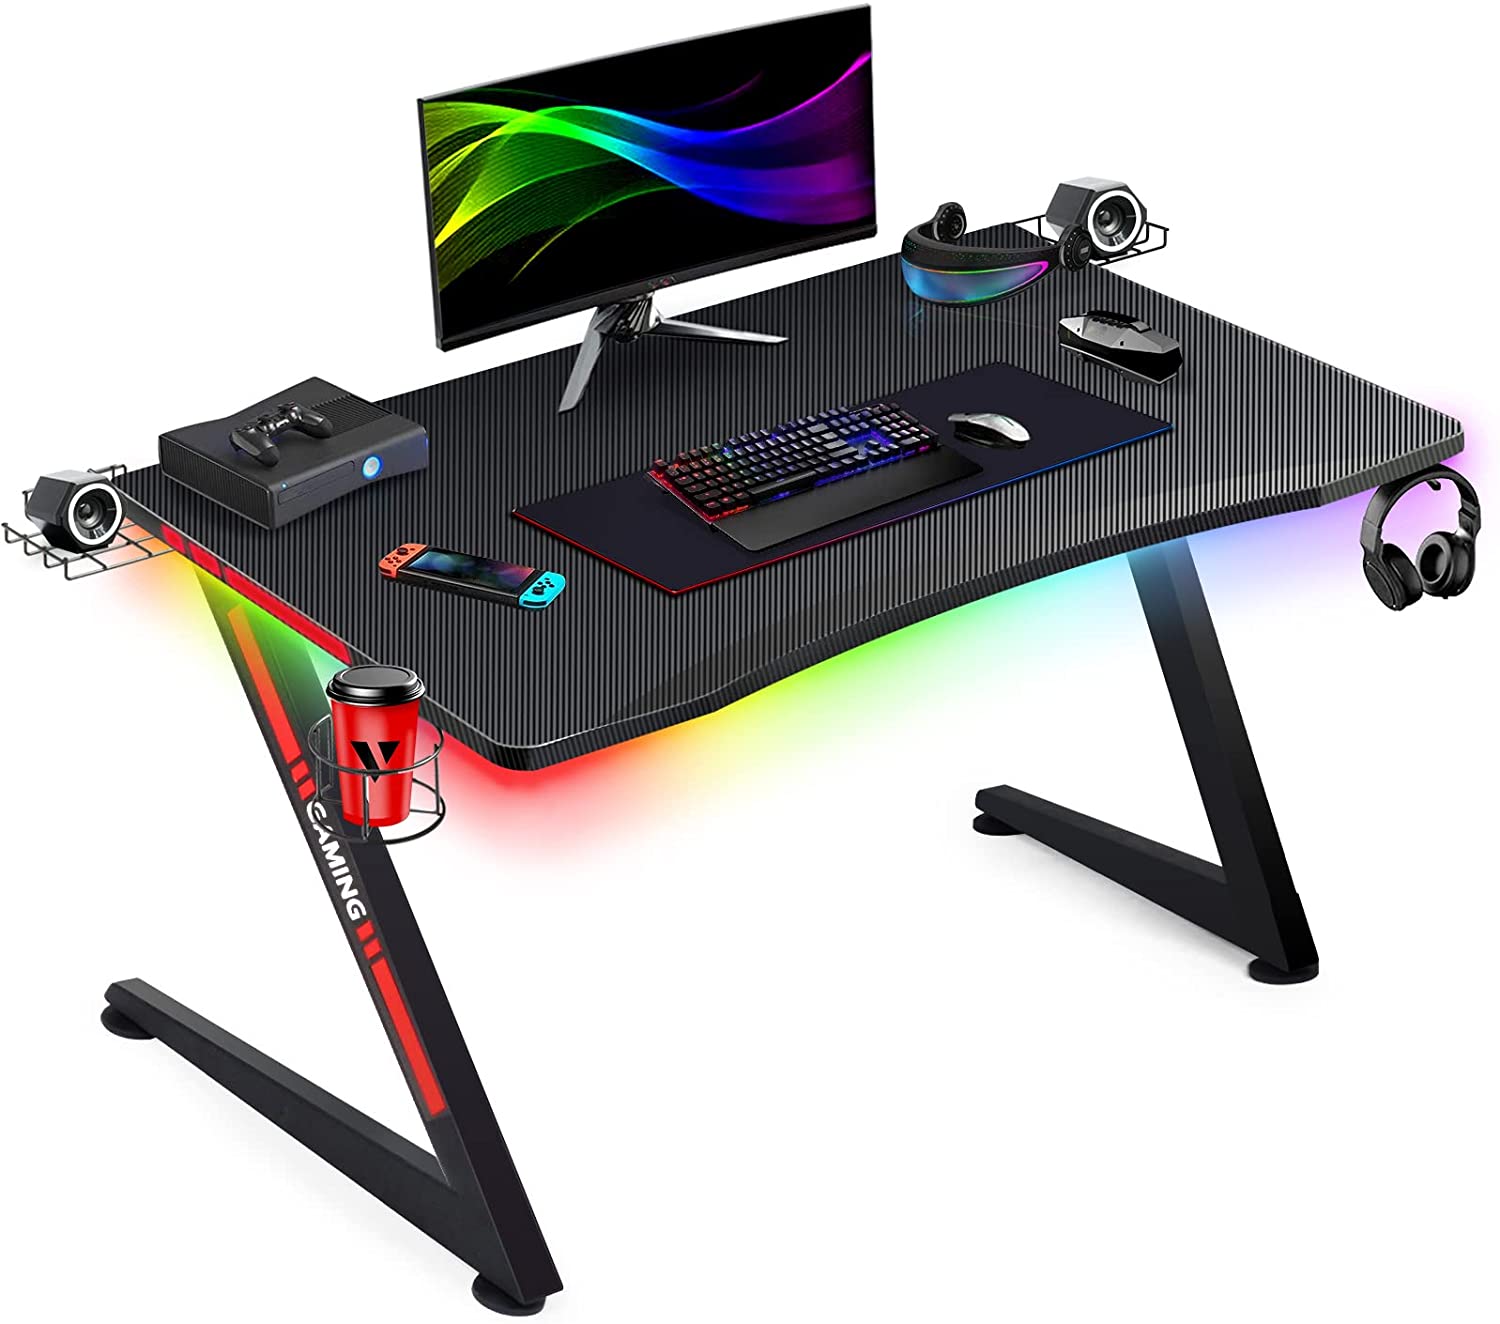 Eureka Ergonomic 43 inch Glass RGB Gaming Desk with App Controlled Lighting